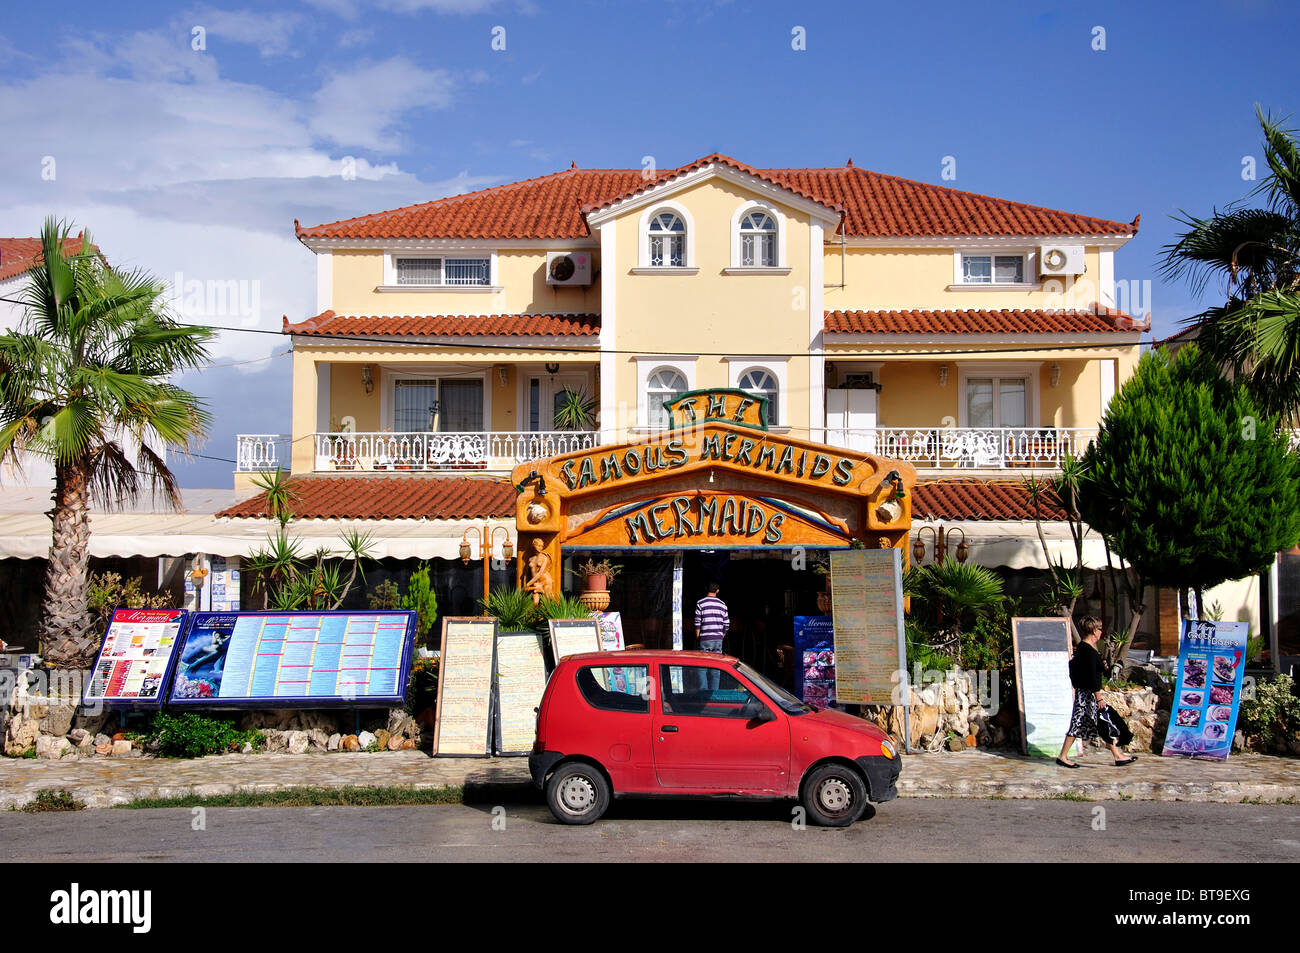 The Famous Mermaids Taverna, Kalamaki, Zakynthos (Zante), Ionian Islands, Greece Stock Photo